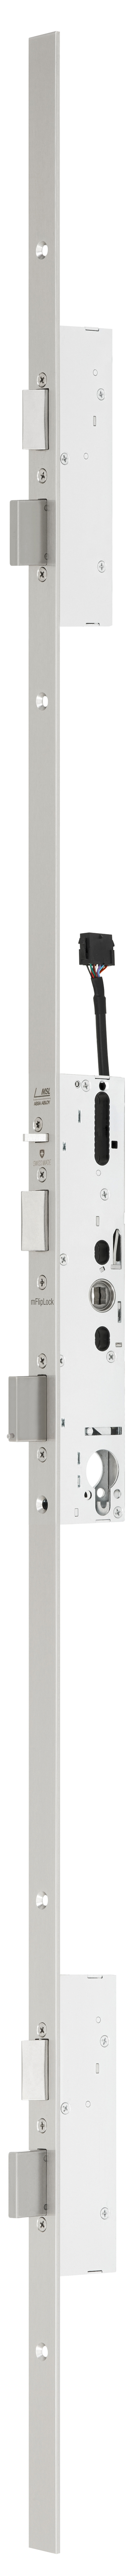 mFlipLock check panic security multi-point lock 24574PE-SV-ZF